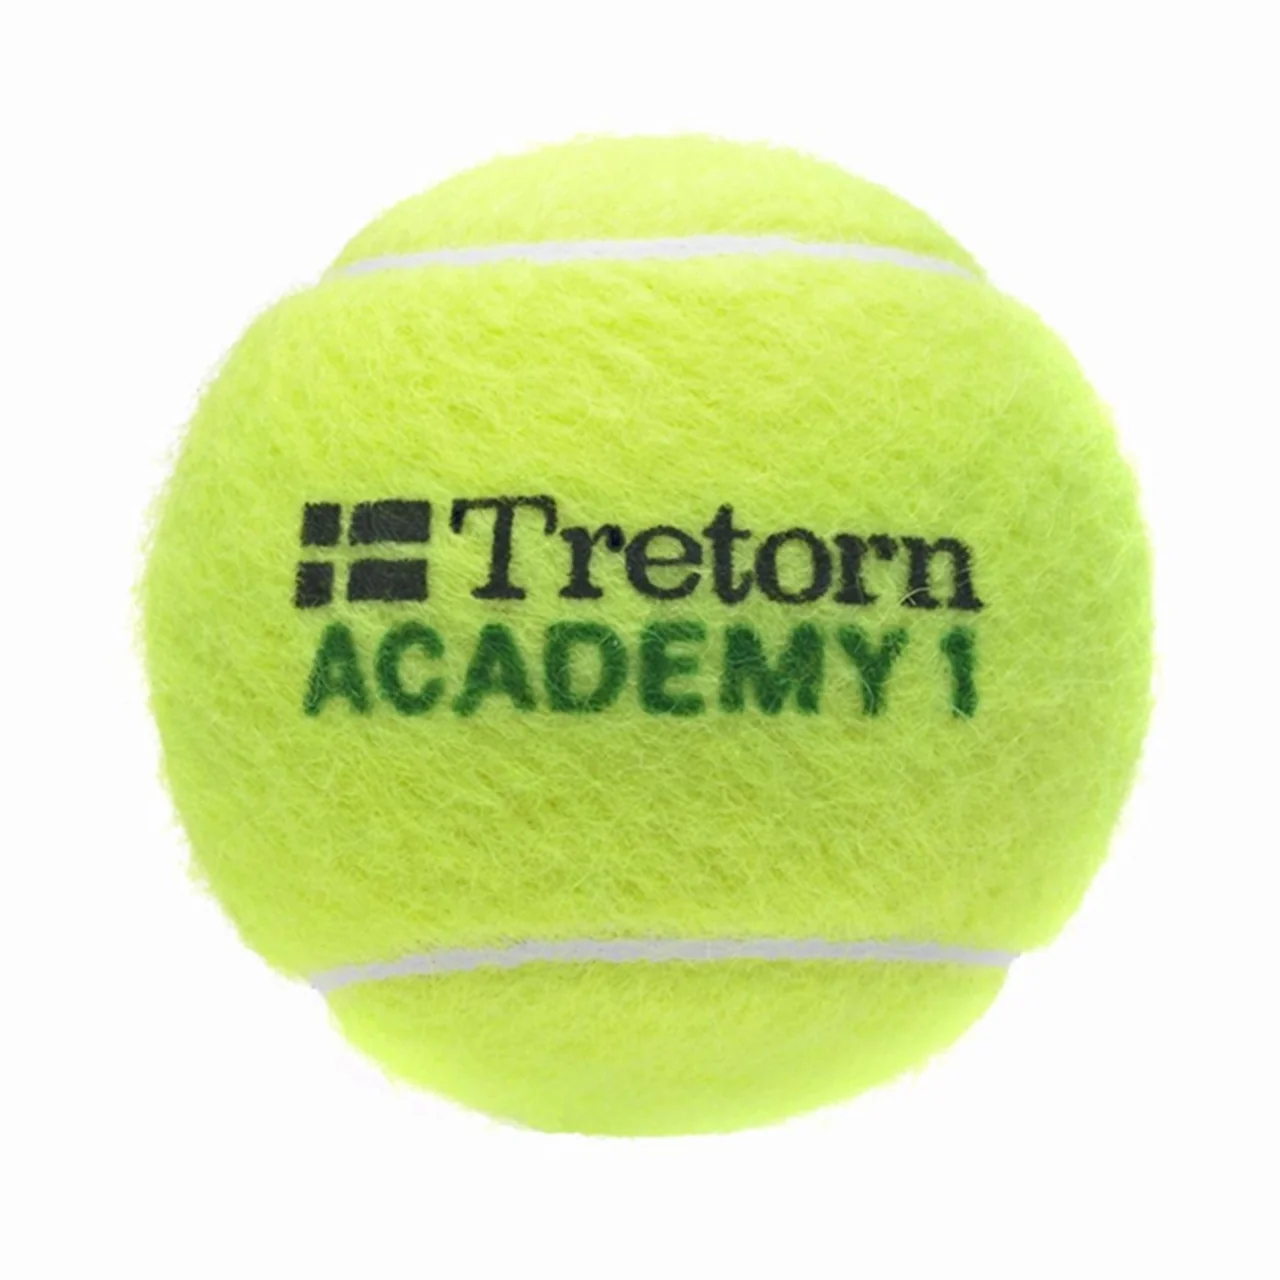 Tretorn Academy Stage 1. 72 balles